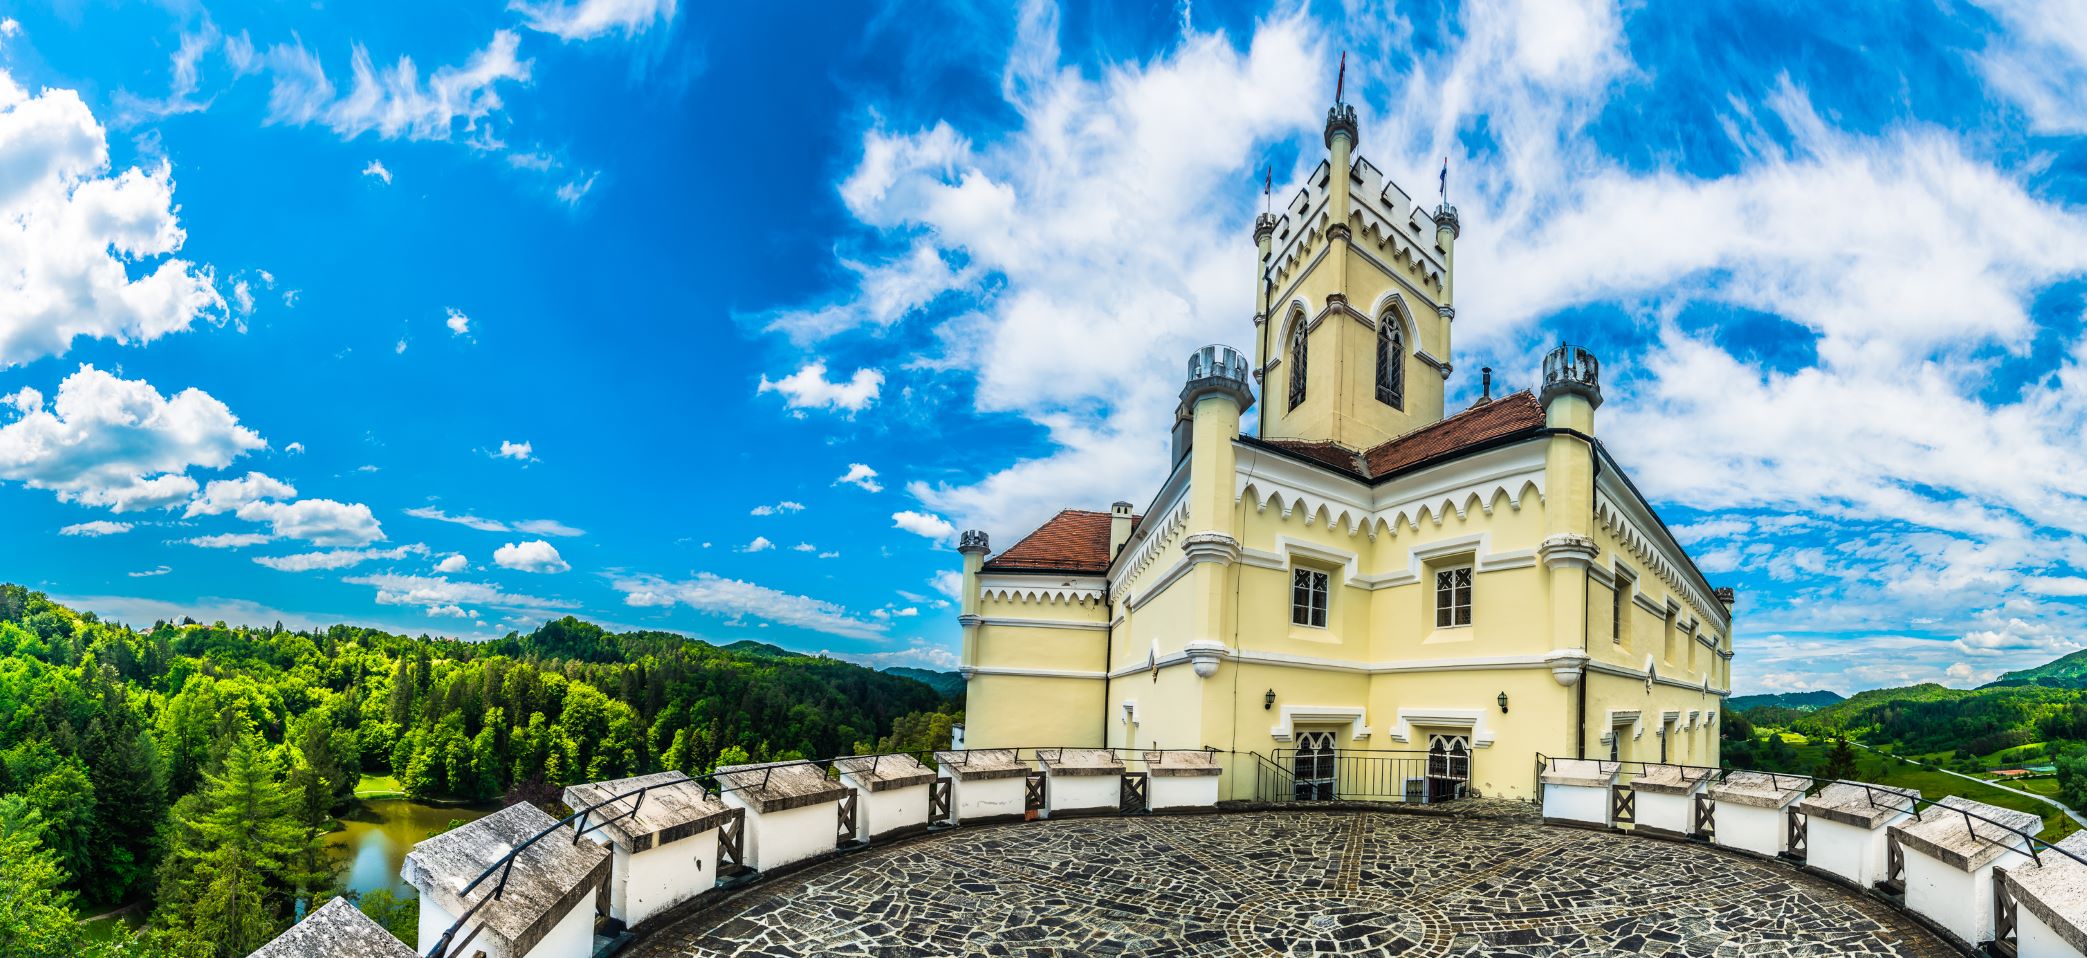 KNM Travel DMC,  Croatia , Trakoscjan castle